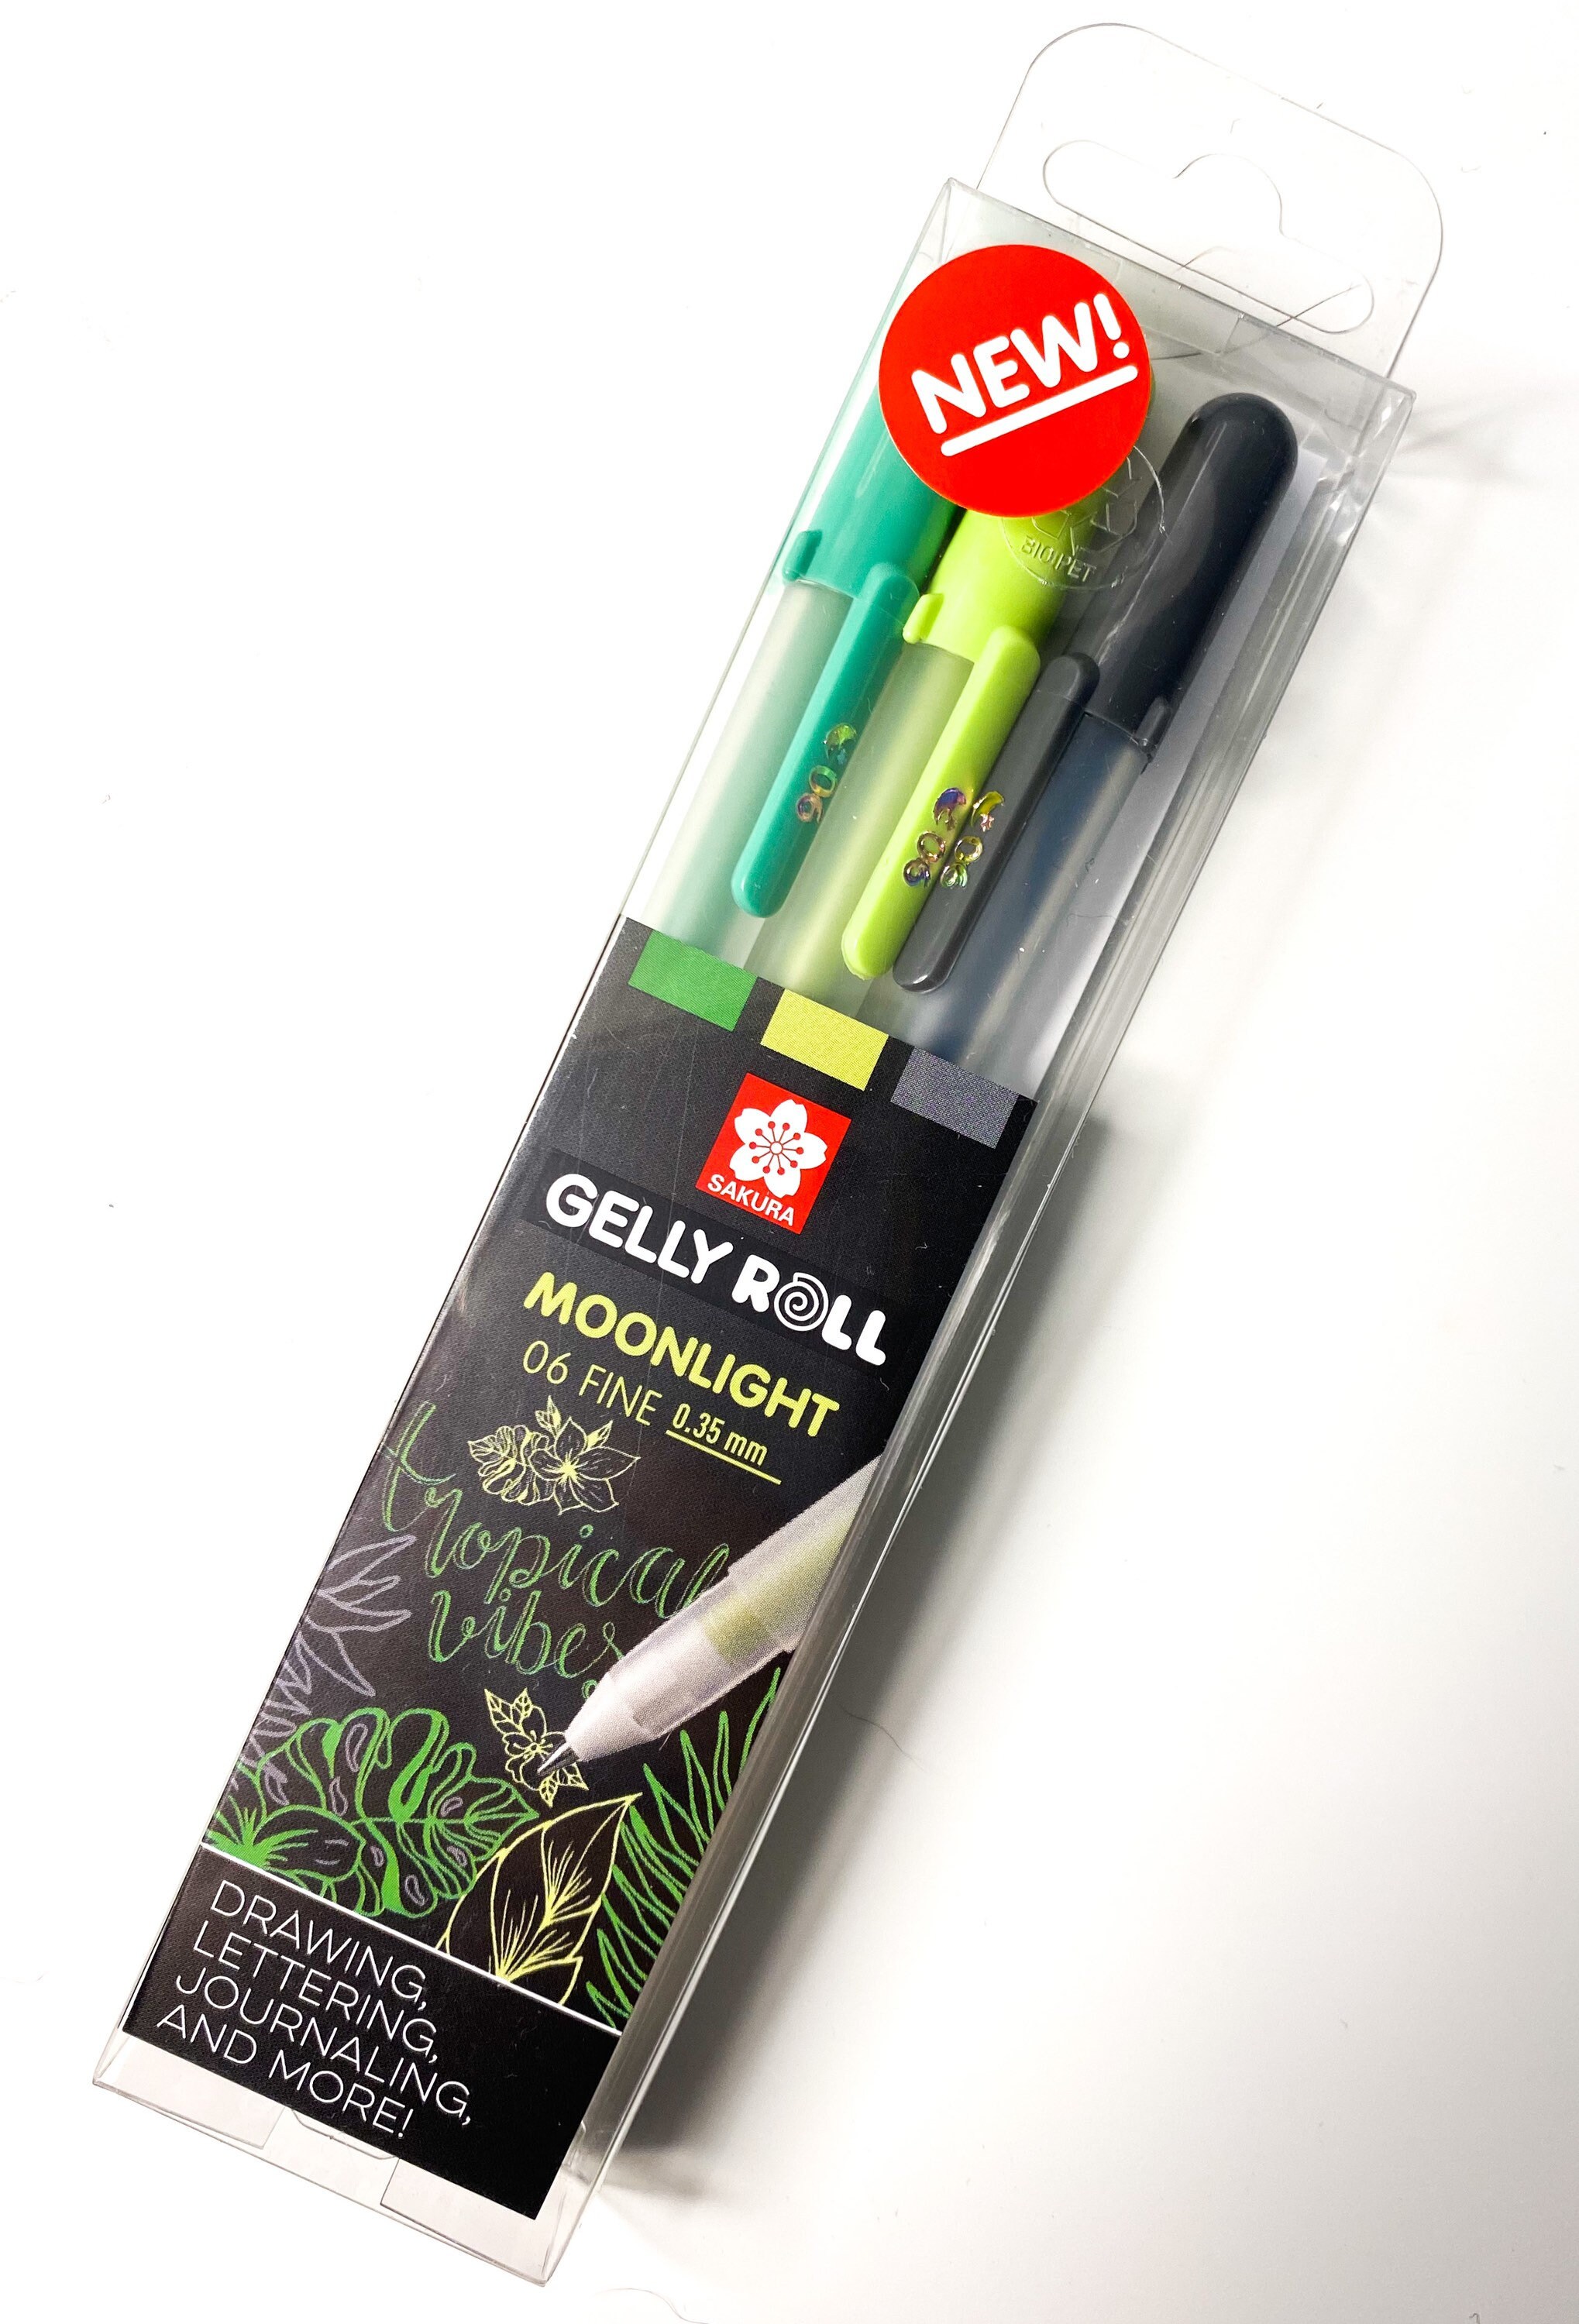 SAKURA Gelly Roll Moonlight Gel Pens - Happy Set (Pack of 3) - NEW